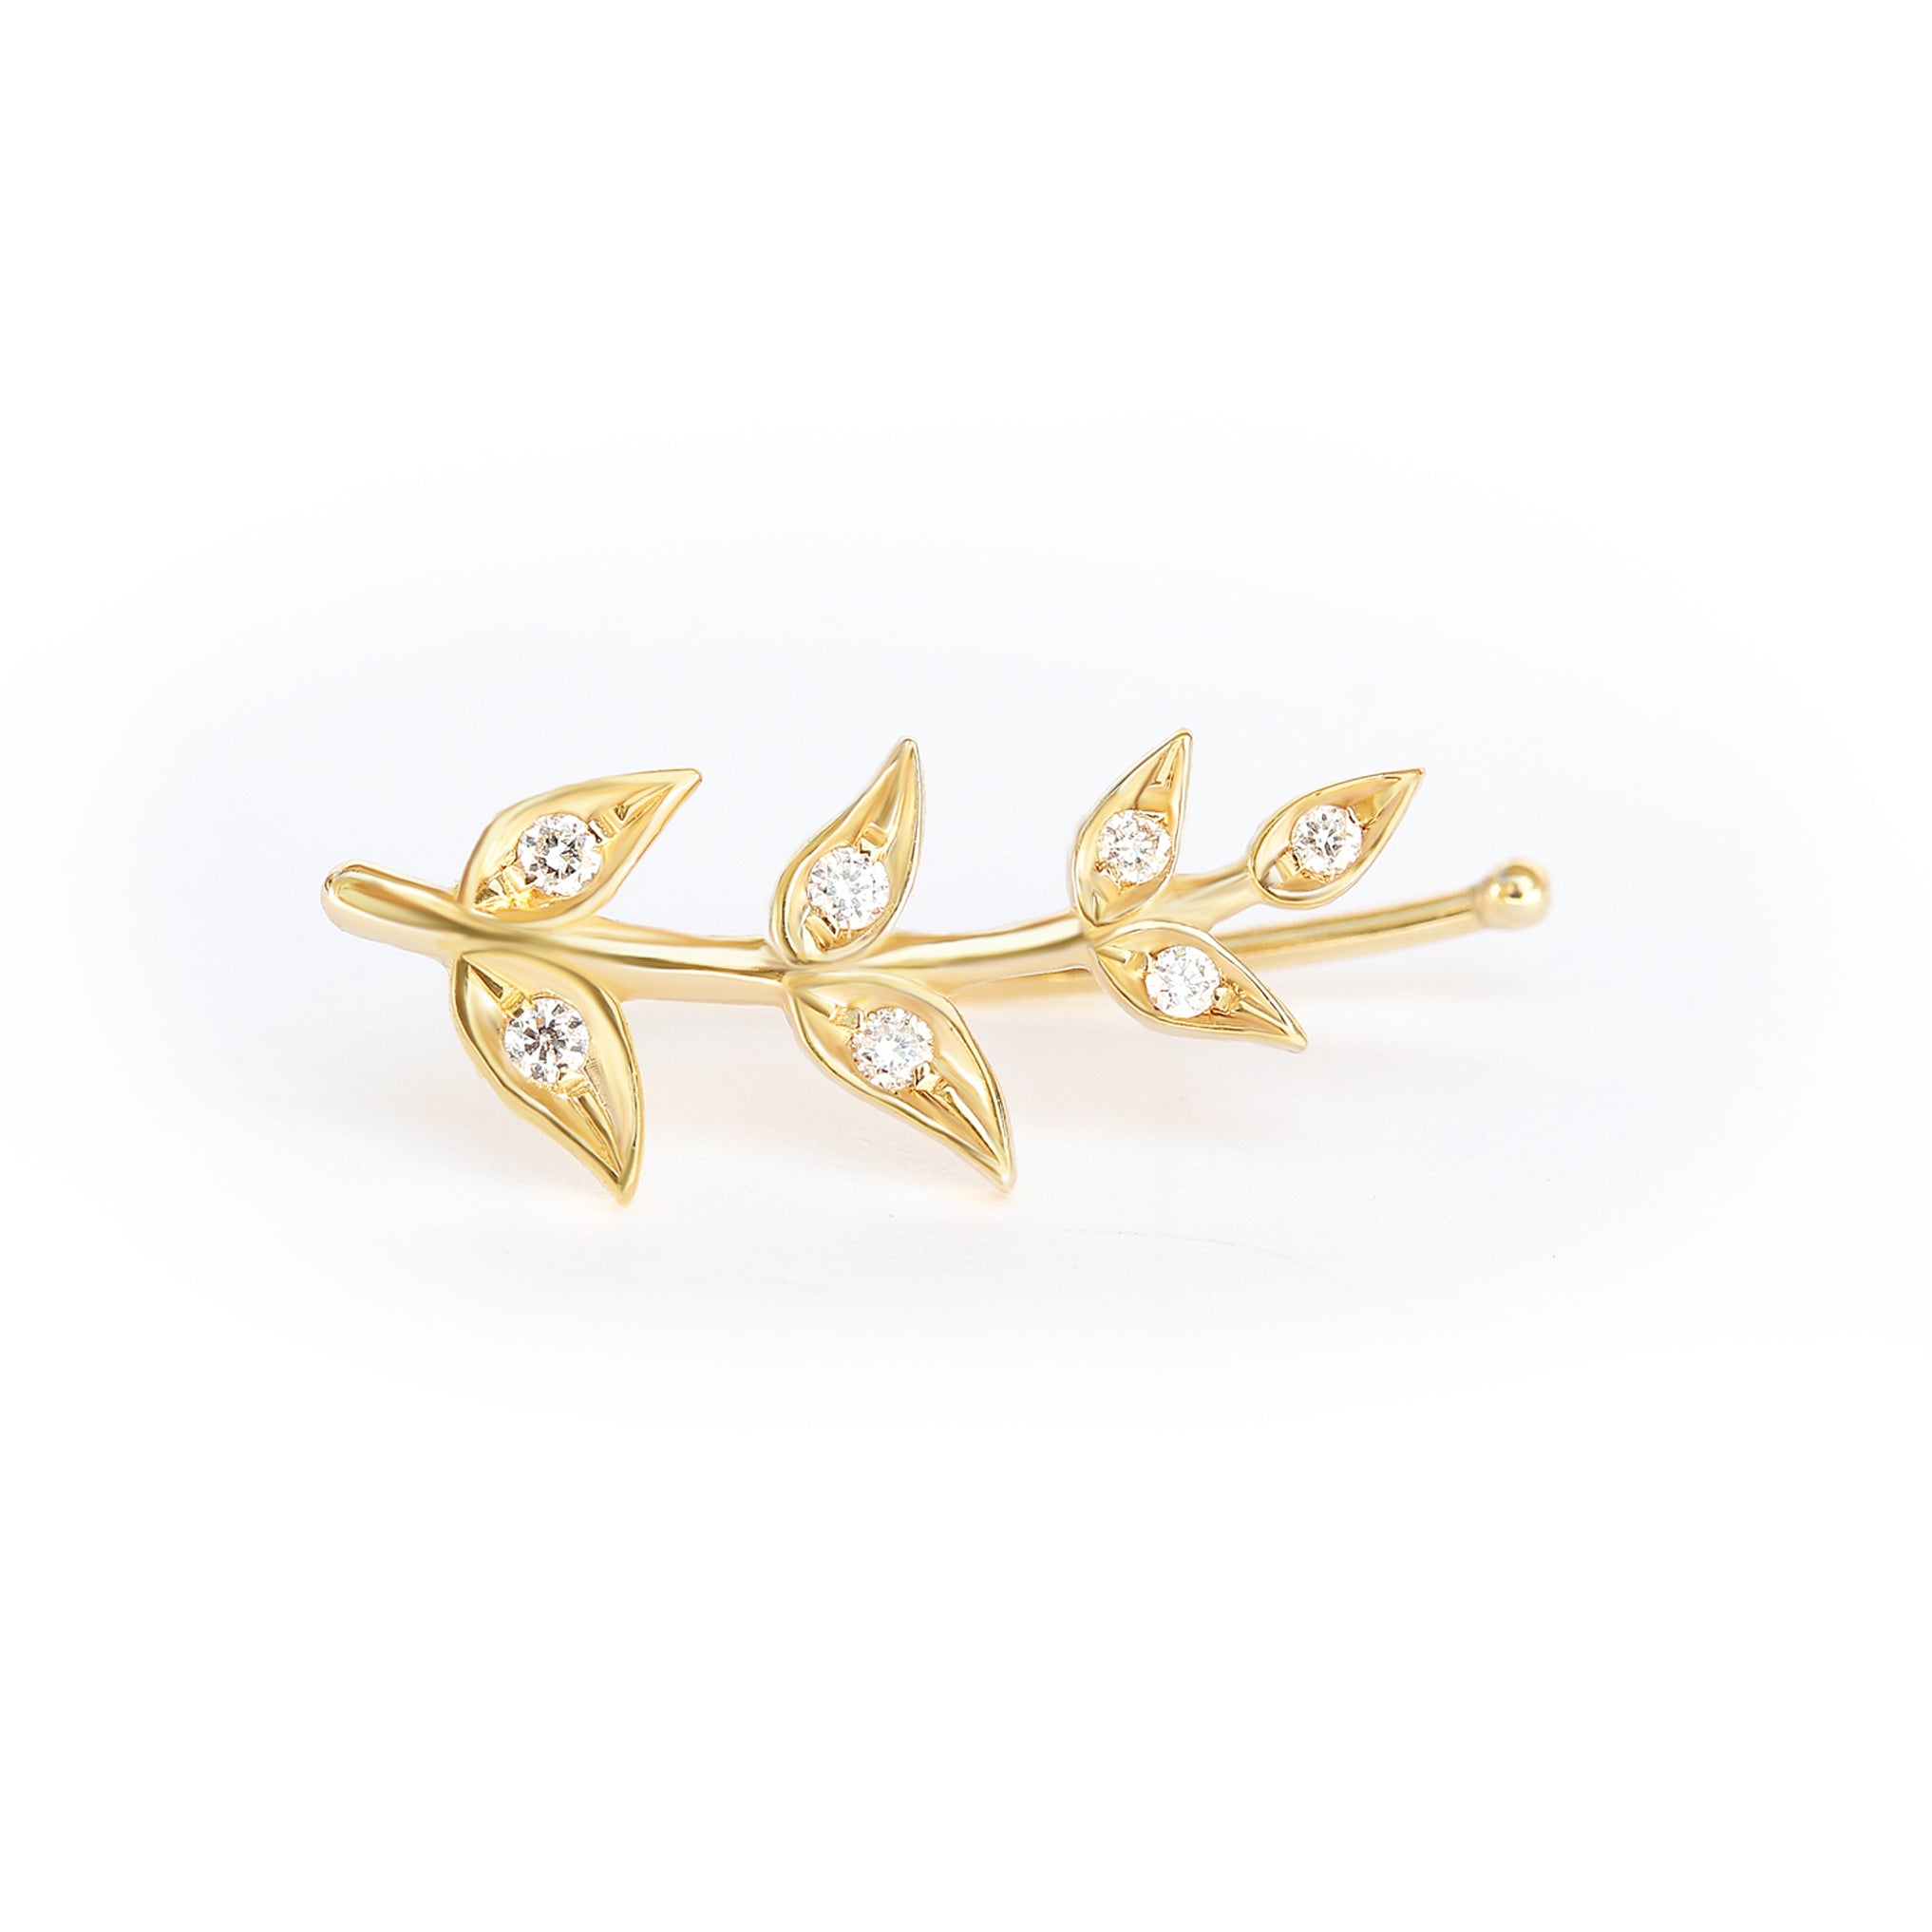 Olive Branch Leaves gold & Diamonds wedding earring - 14K Yellow gold ,Ready to ship - sillyshinydiamonds